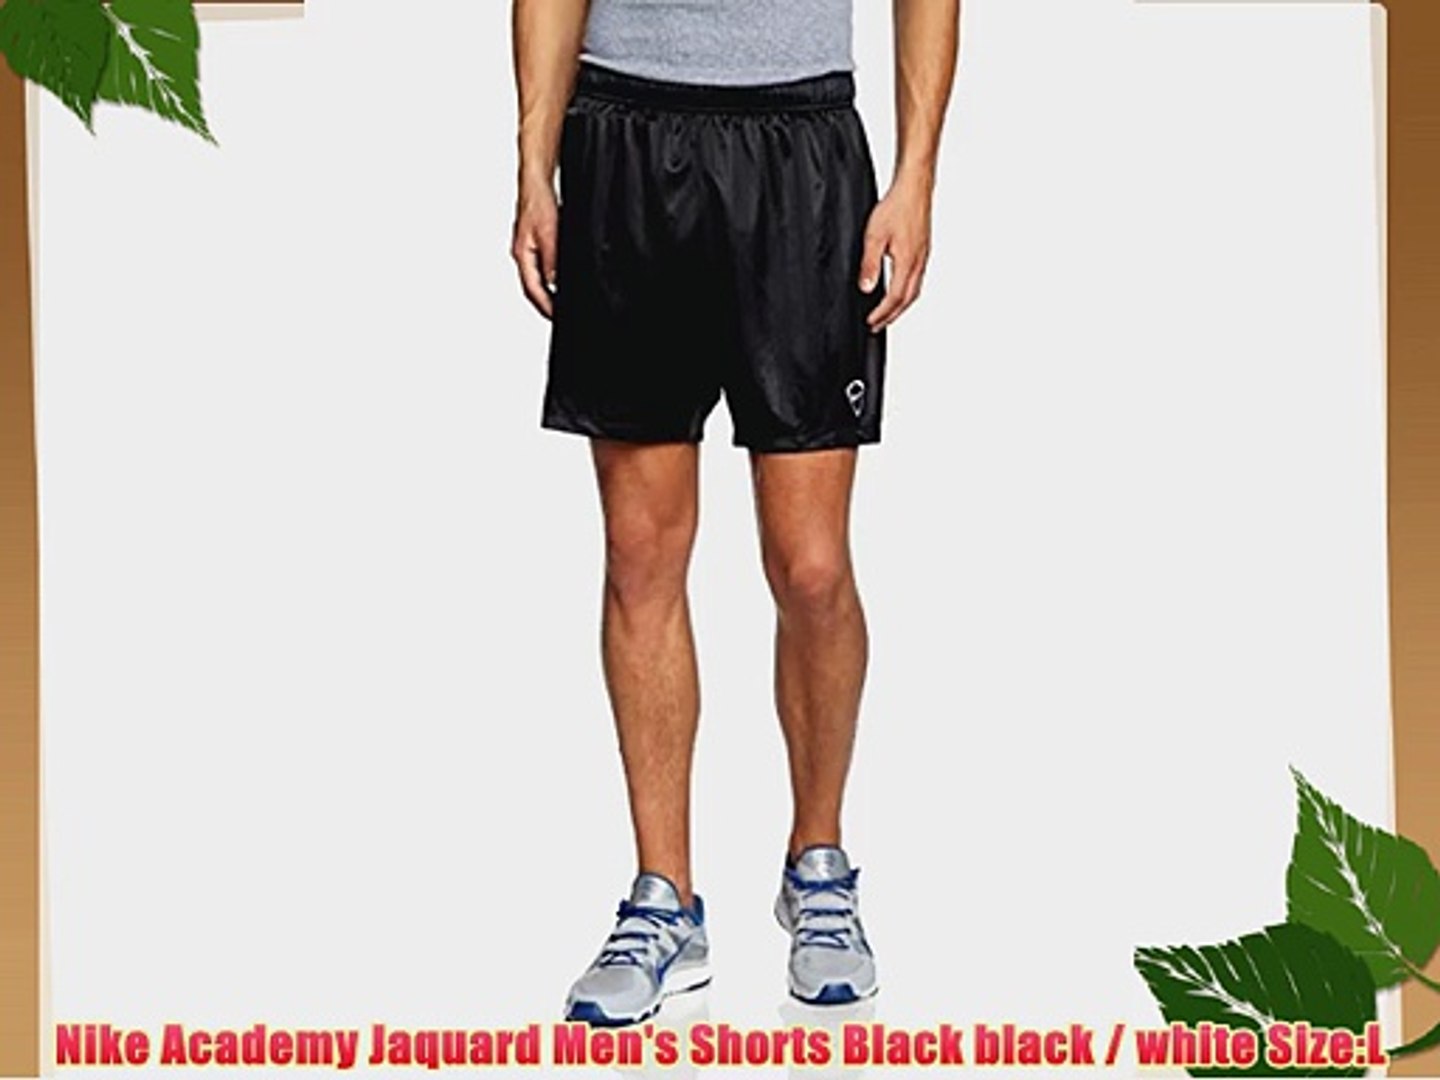 Nike Academy Jaquard Men's Shorts Black black / white Size:L - video  Dailymotion